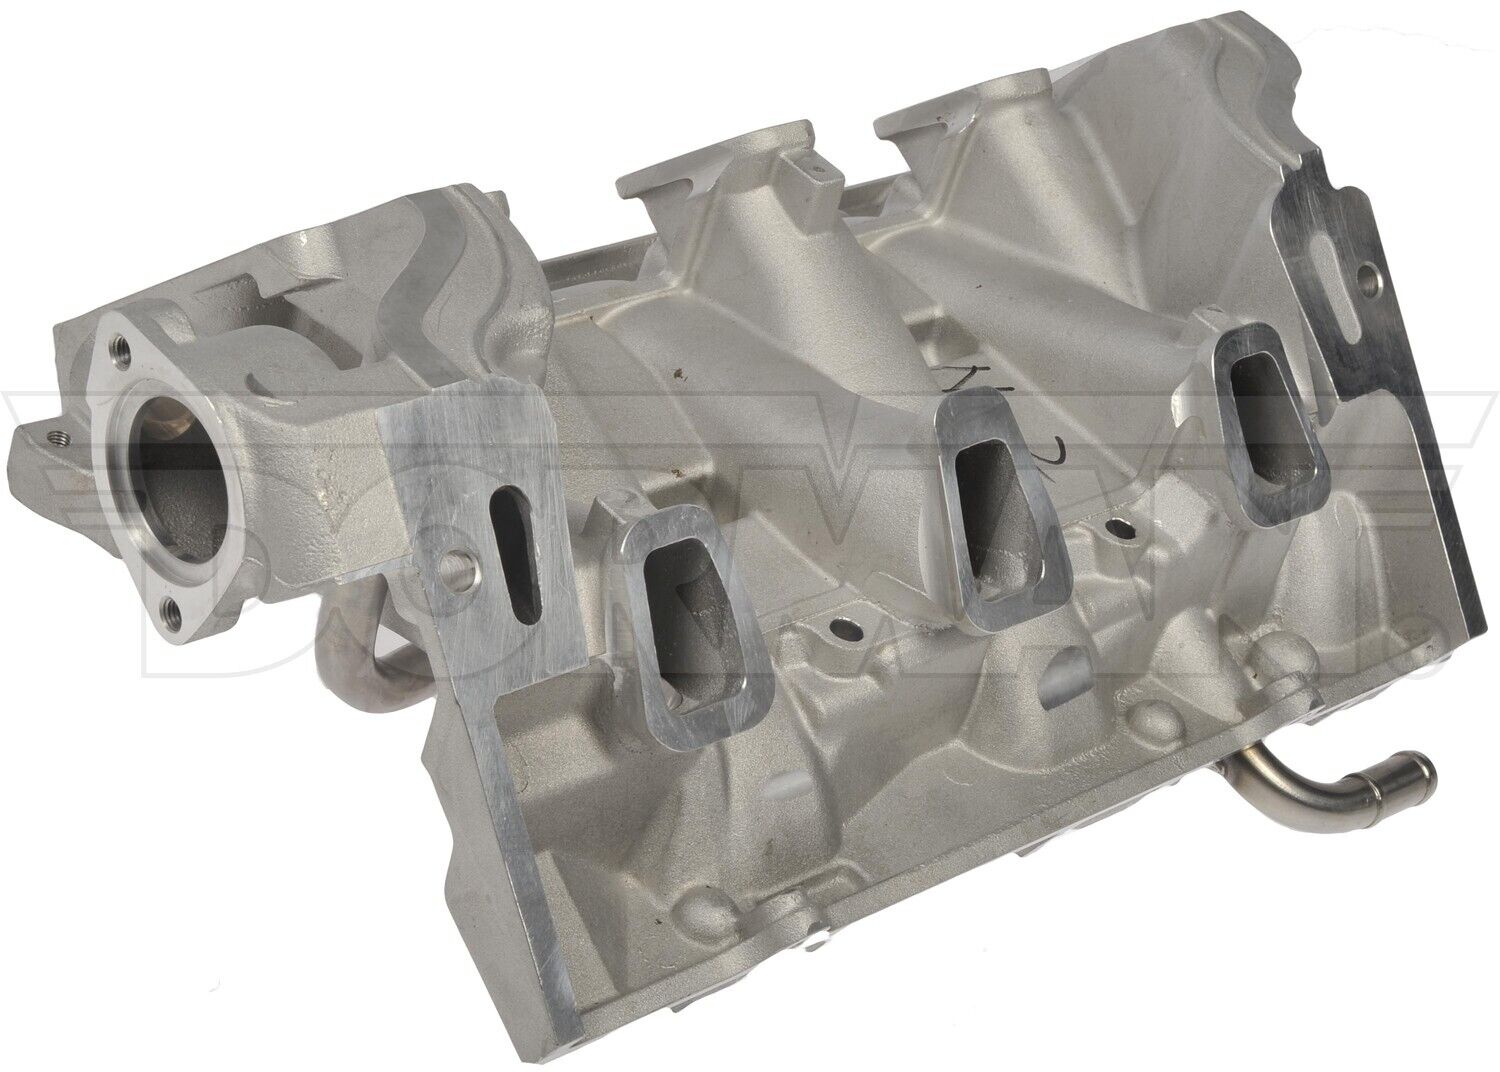 Lower Engine Intake Manifold Dorman For 2000-2005 Chevrolet Venture 3.4L V6